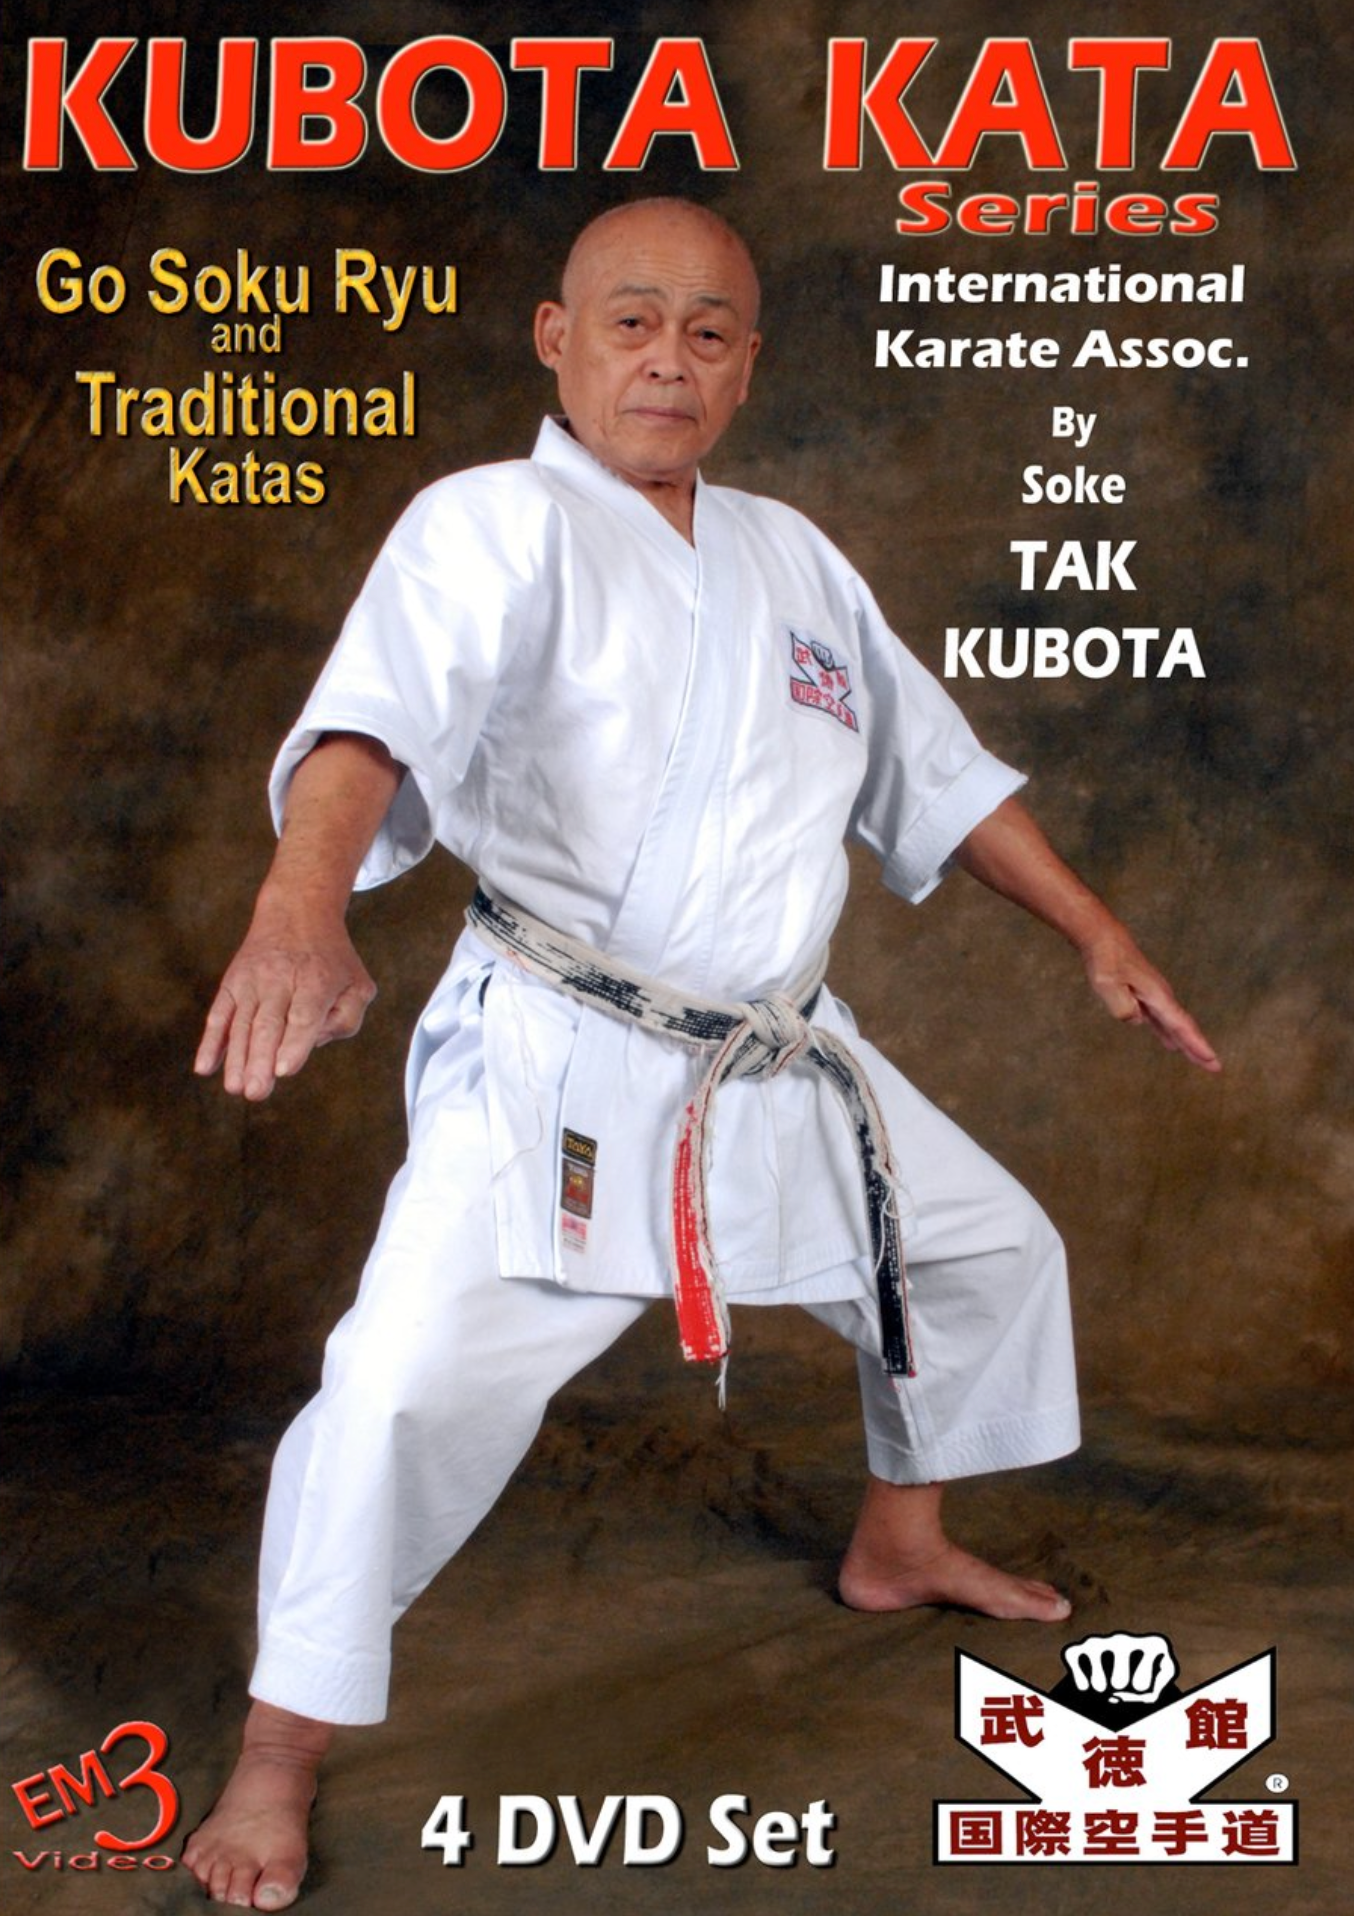 Kubota Kata Series Go Soku Ryu & Traditional Kata 4 DVD Set by Tak Kubota - Budovideos Inc